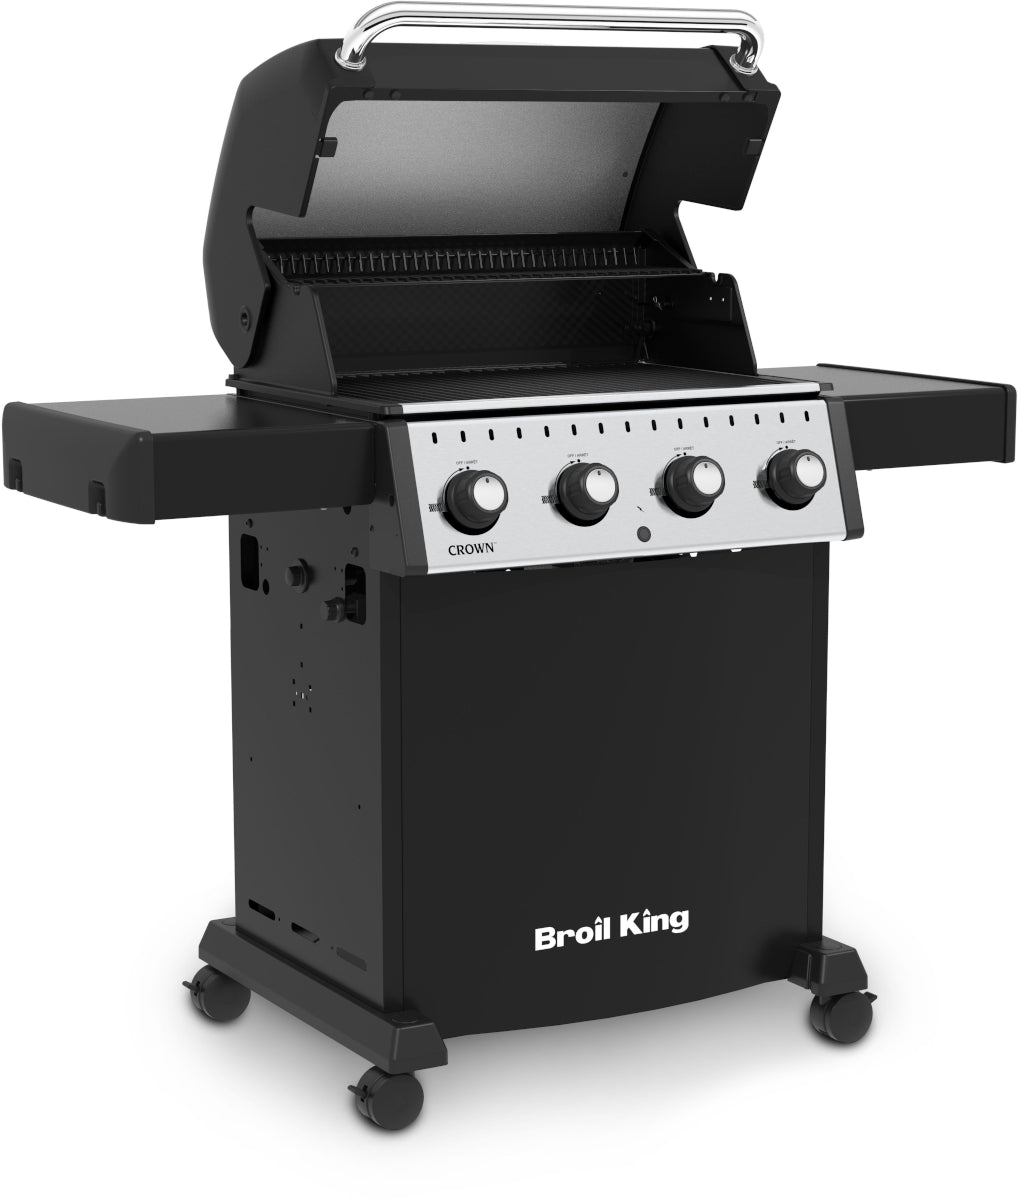 Broil King Crown 410 - 4 main burners